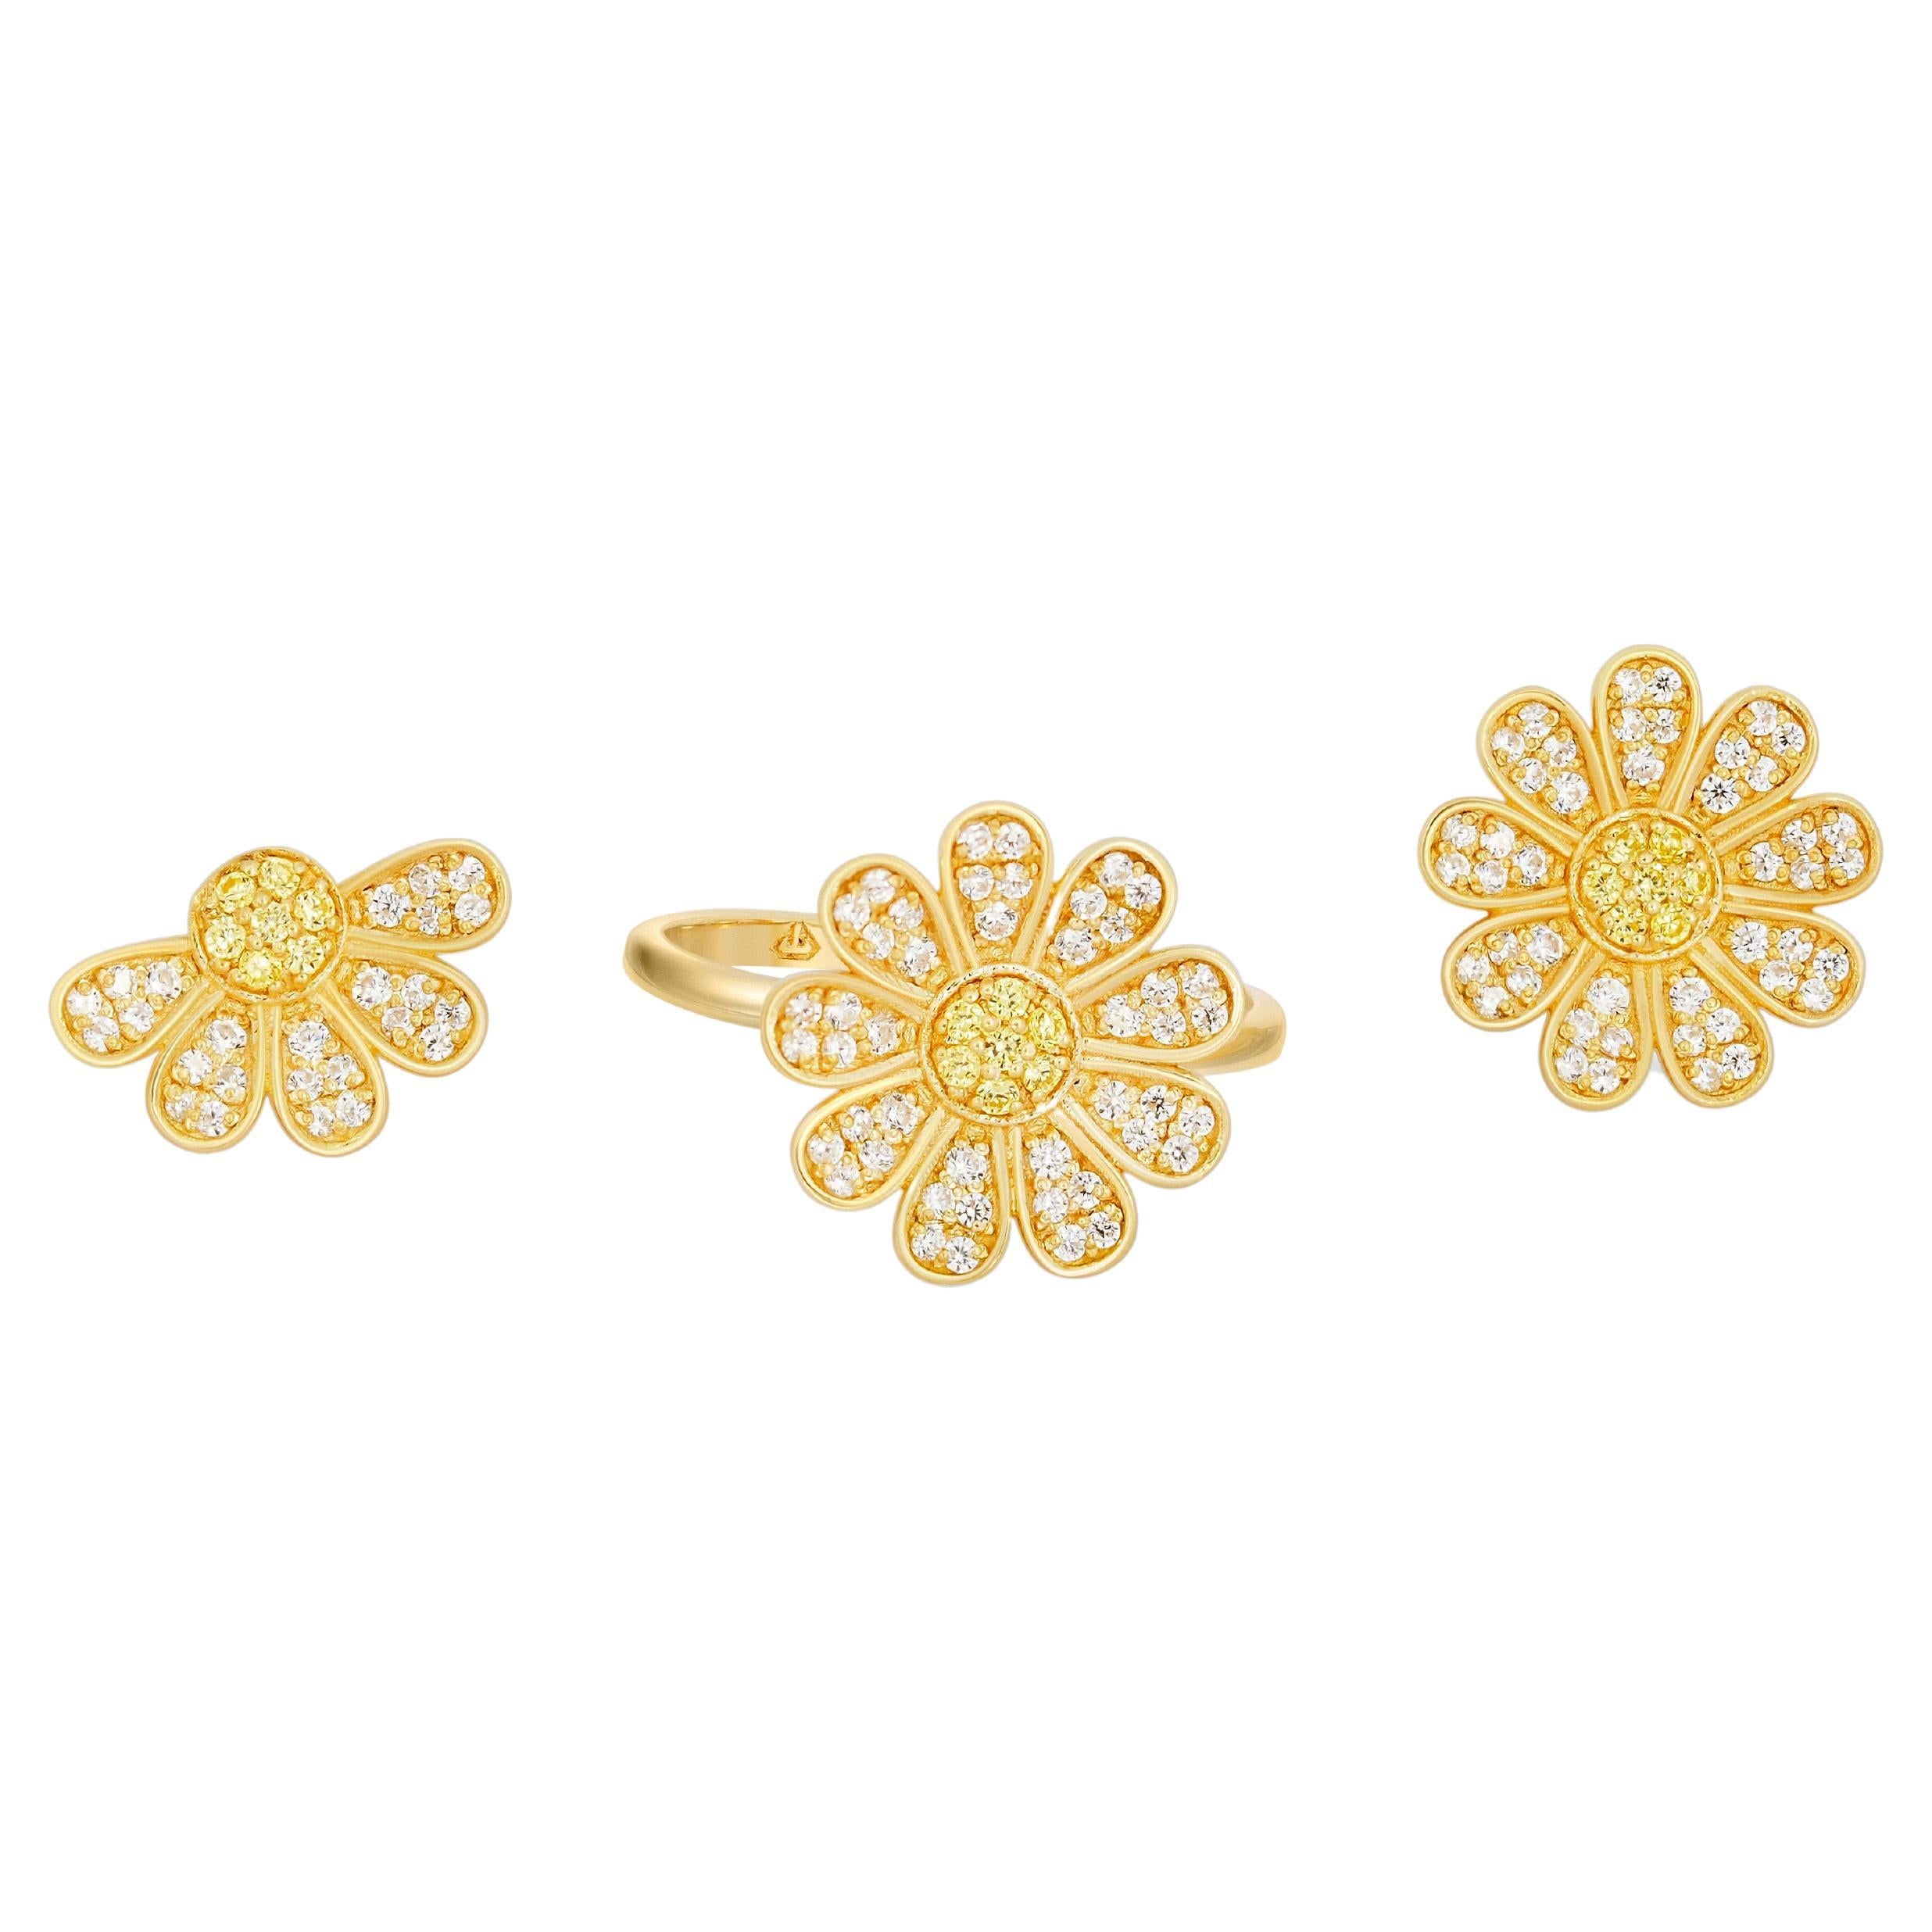 Daisy flower 14k gold ring and earrings set  For Sale